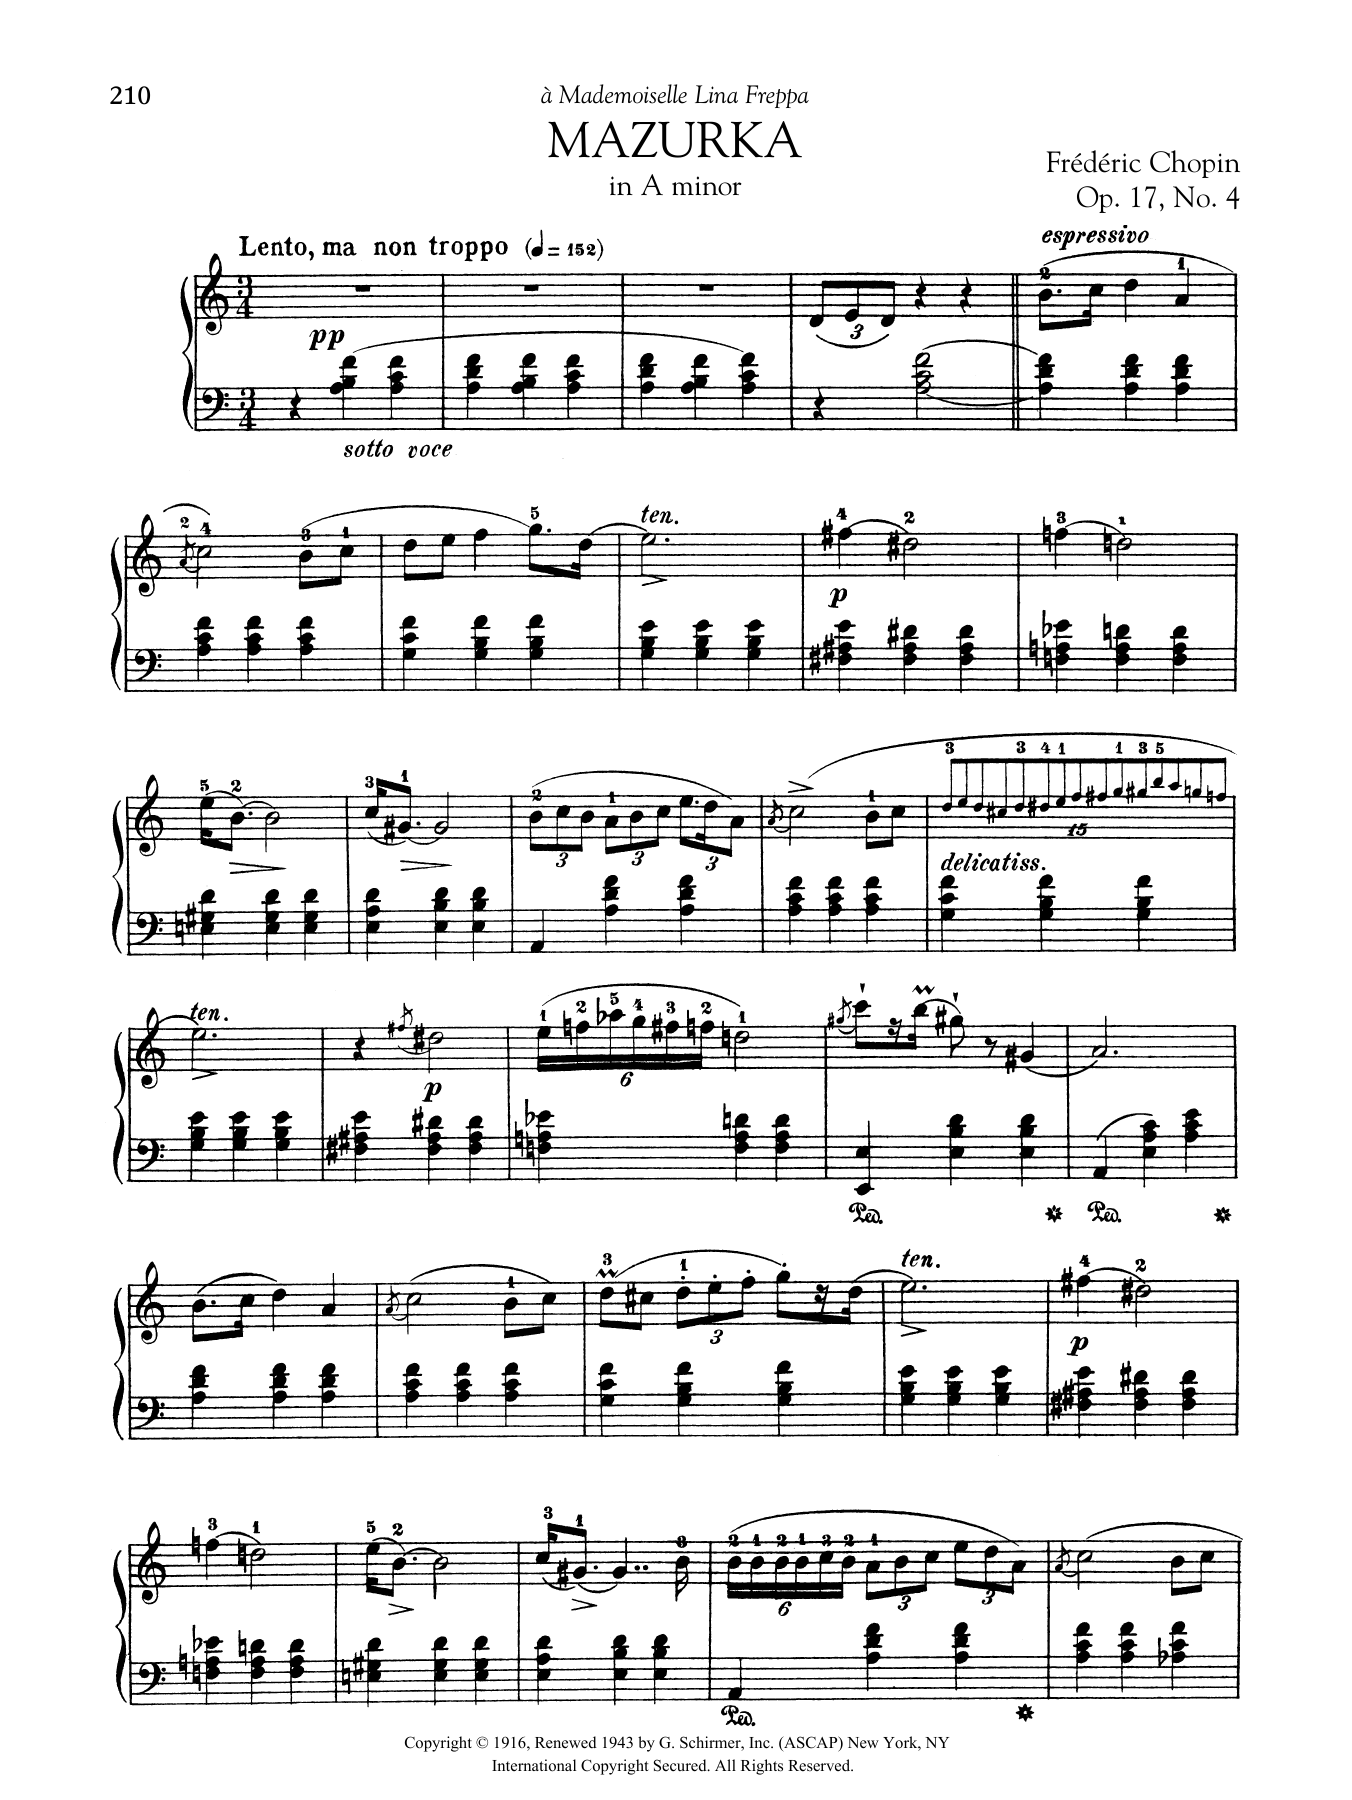 Download Frederic Chopin Mazurka in A minor, Op. 17, No. 4 Sheet Music